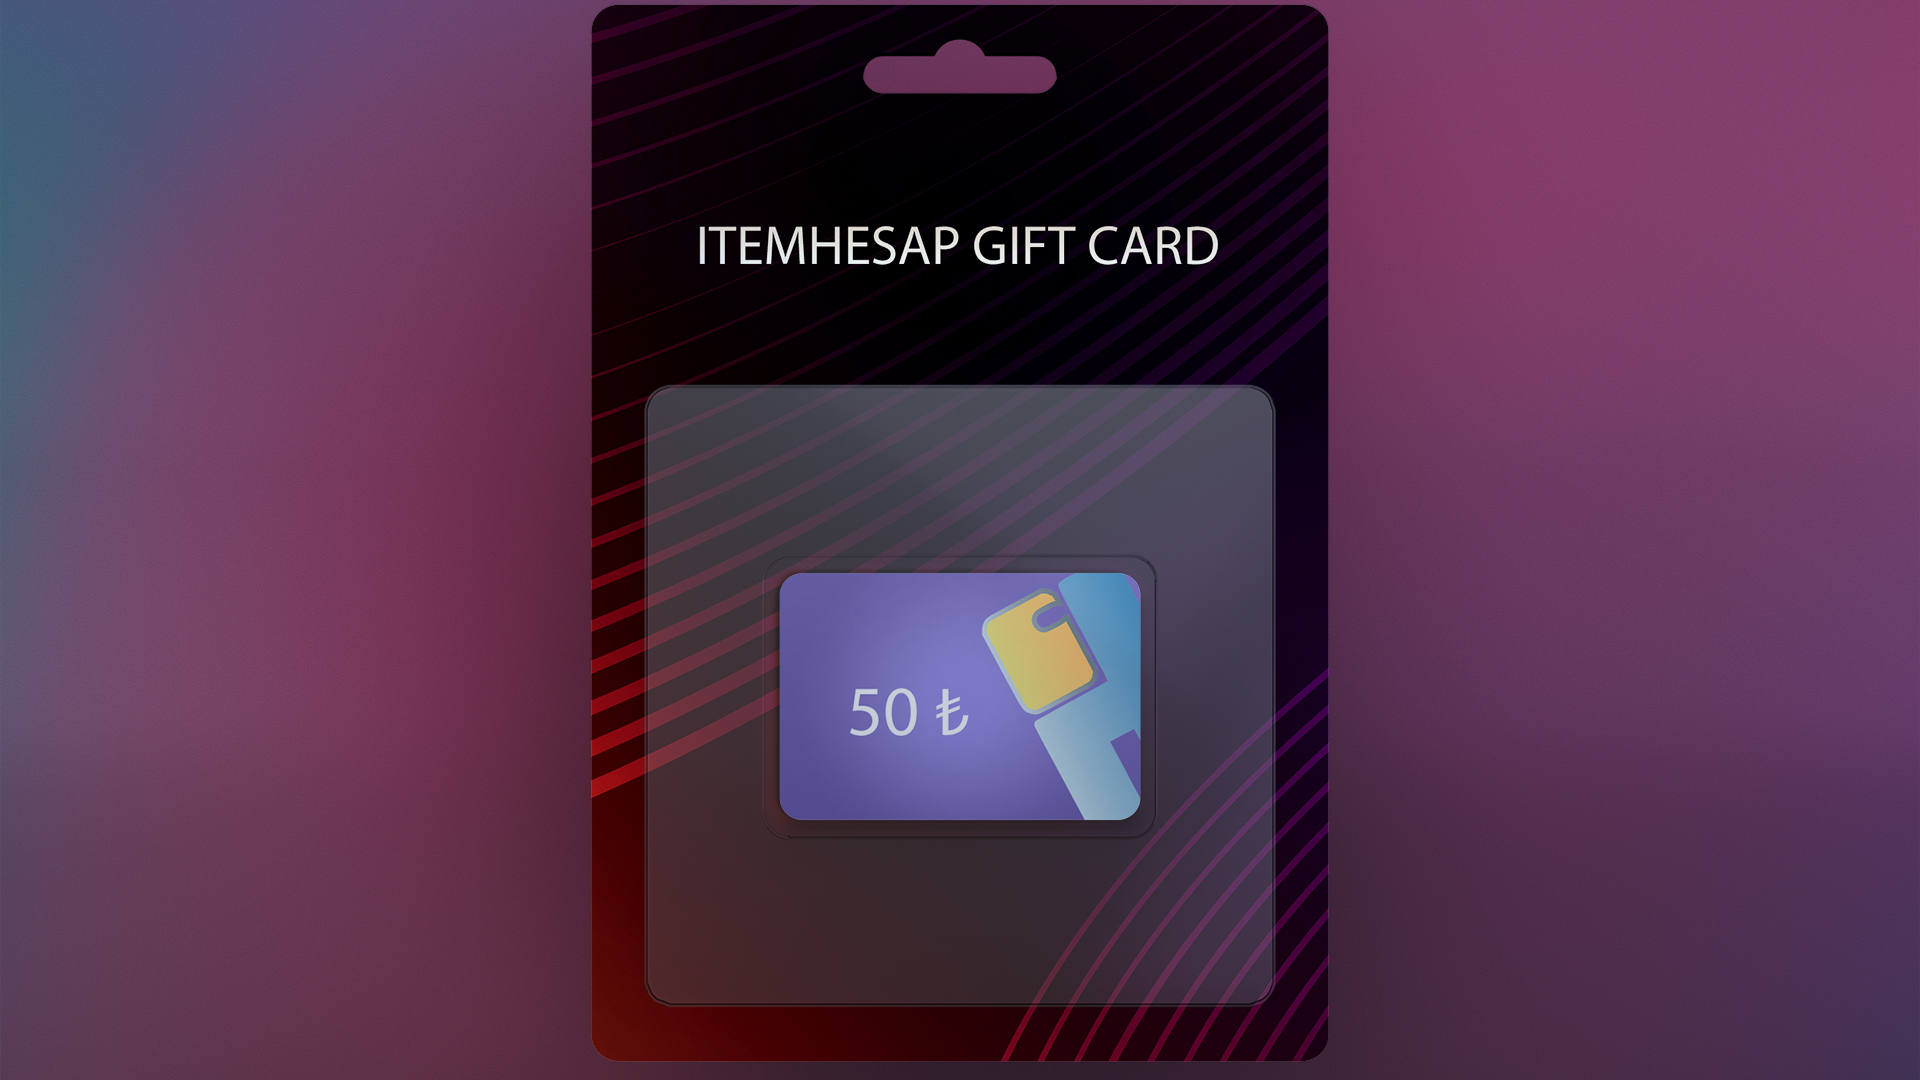 ItemHesap ₺50 Gift Card 3.53 usd